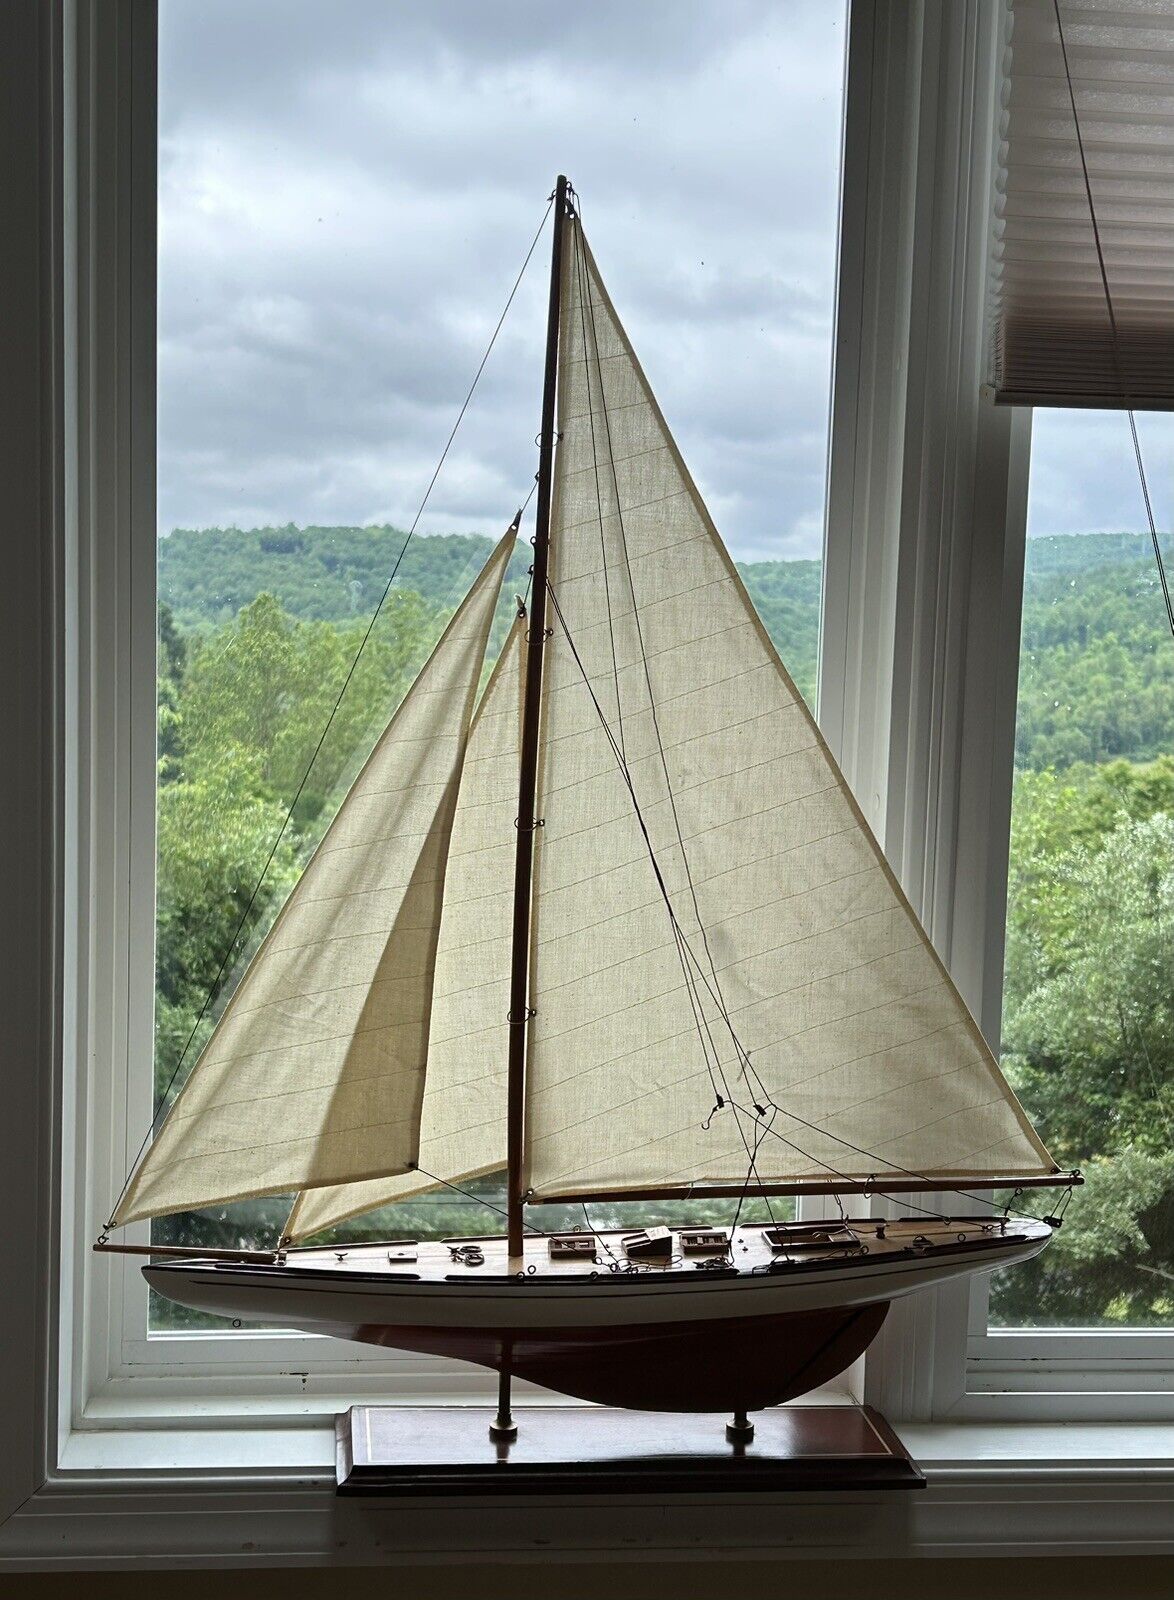 Vintage Large Wooden Model Sailboat Yacht Sailing Boat Boating Cloth Sails Stand